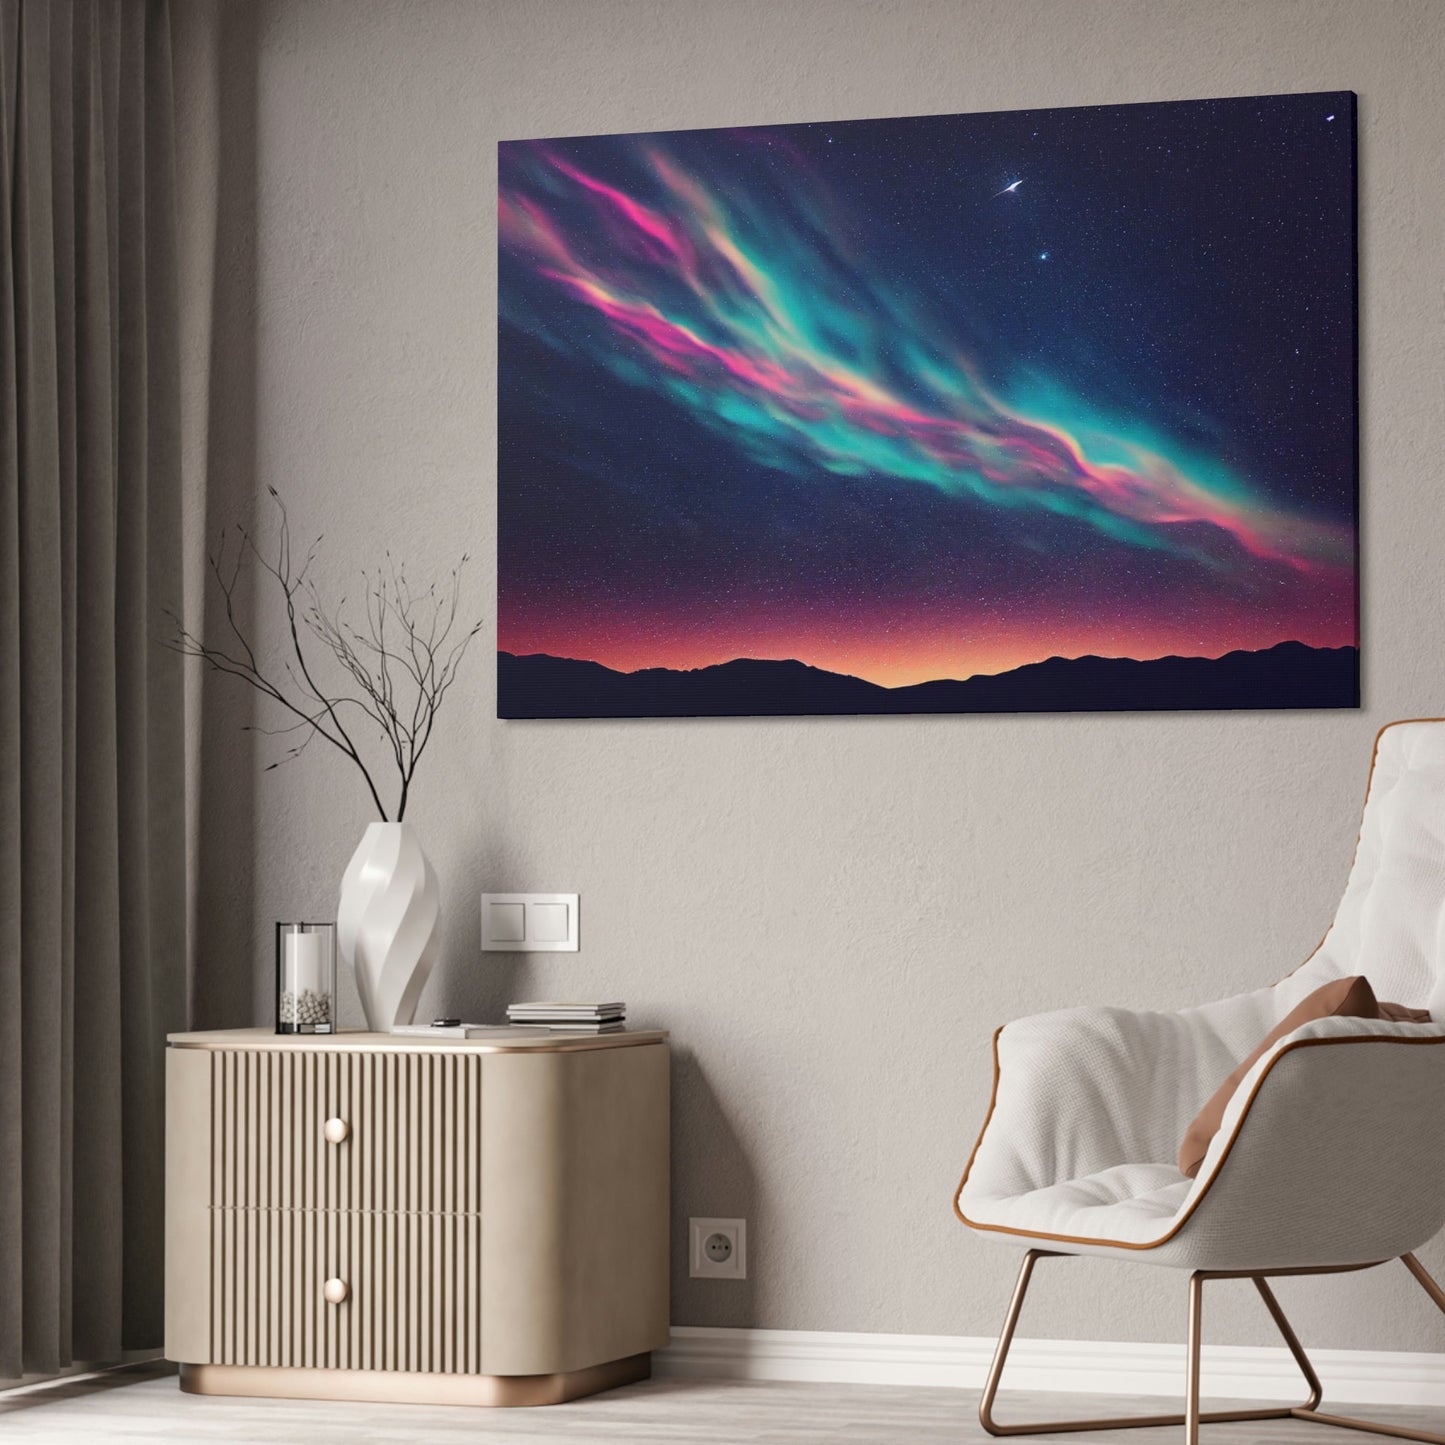 Dazzling Aurora Borealis: A Sparkling Display of Natural Beauty